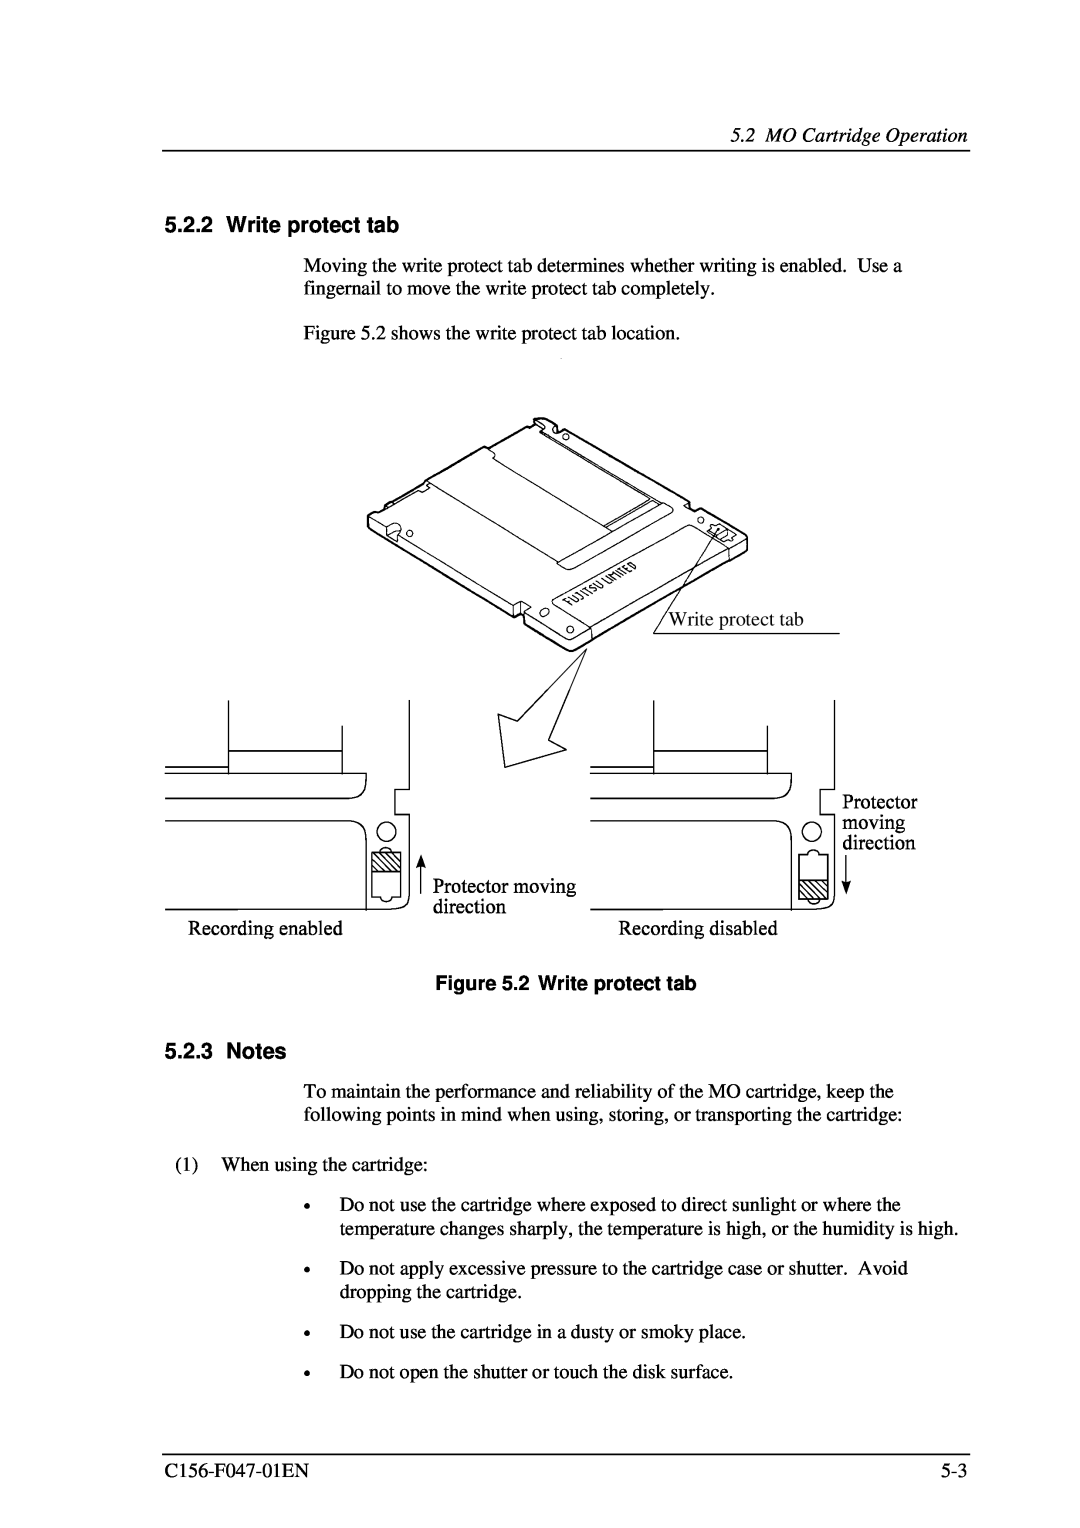 Fujitsu MDG3230UB manual Notes, MO Cartridge Operation, 2 Write protect tab 